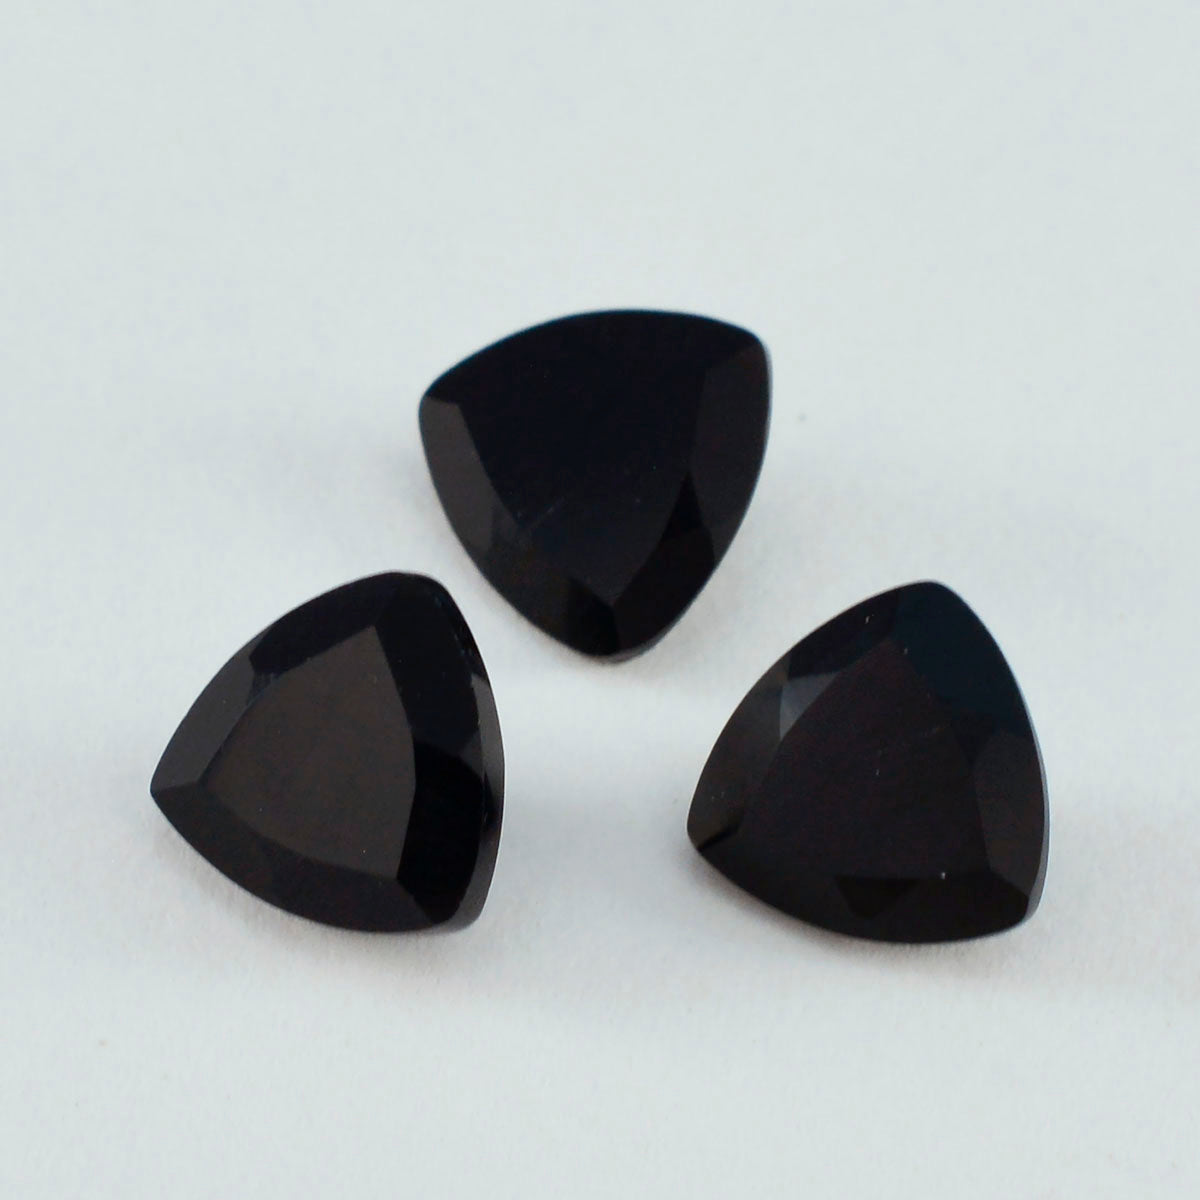 Riyogems 1PC Real Black Onyx Faceted 11x11 mm Trillion Shape pretty Quality Loose Stone